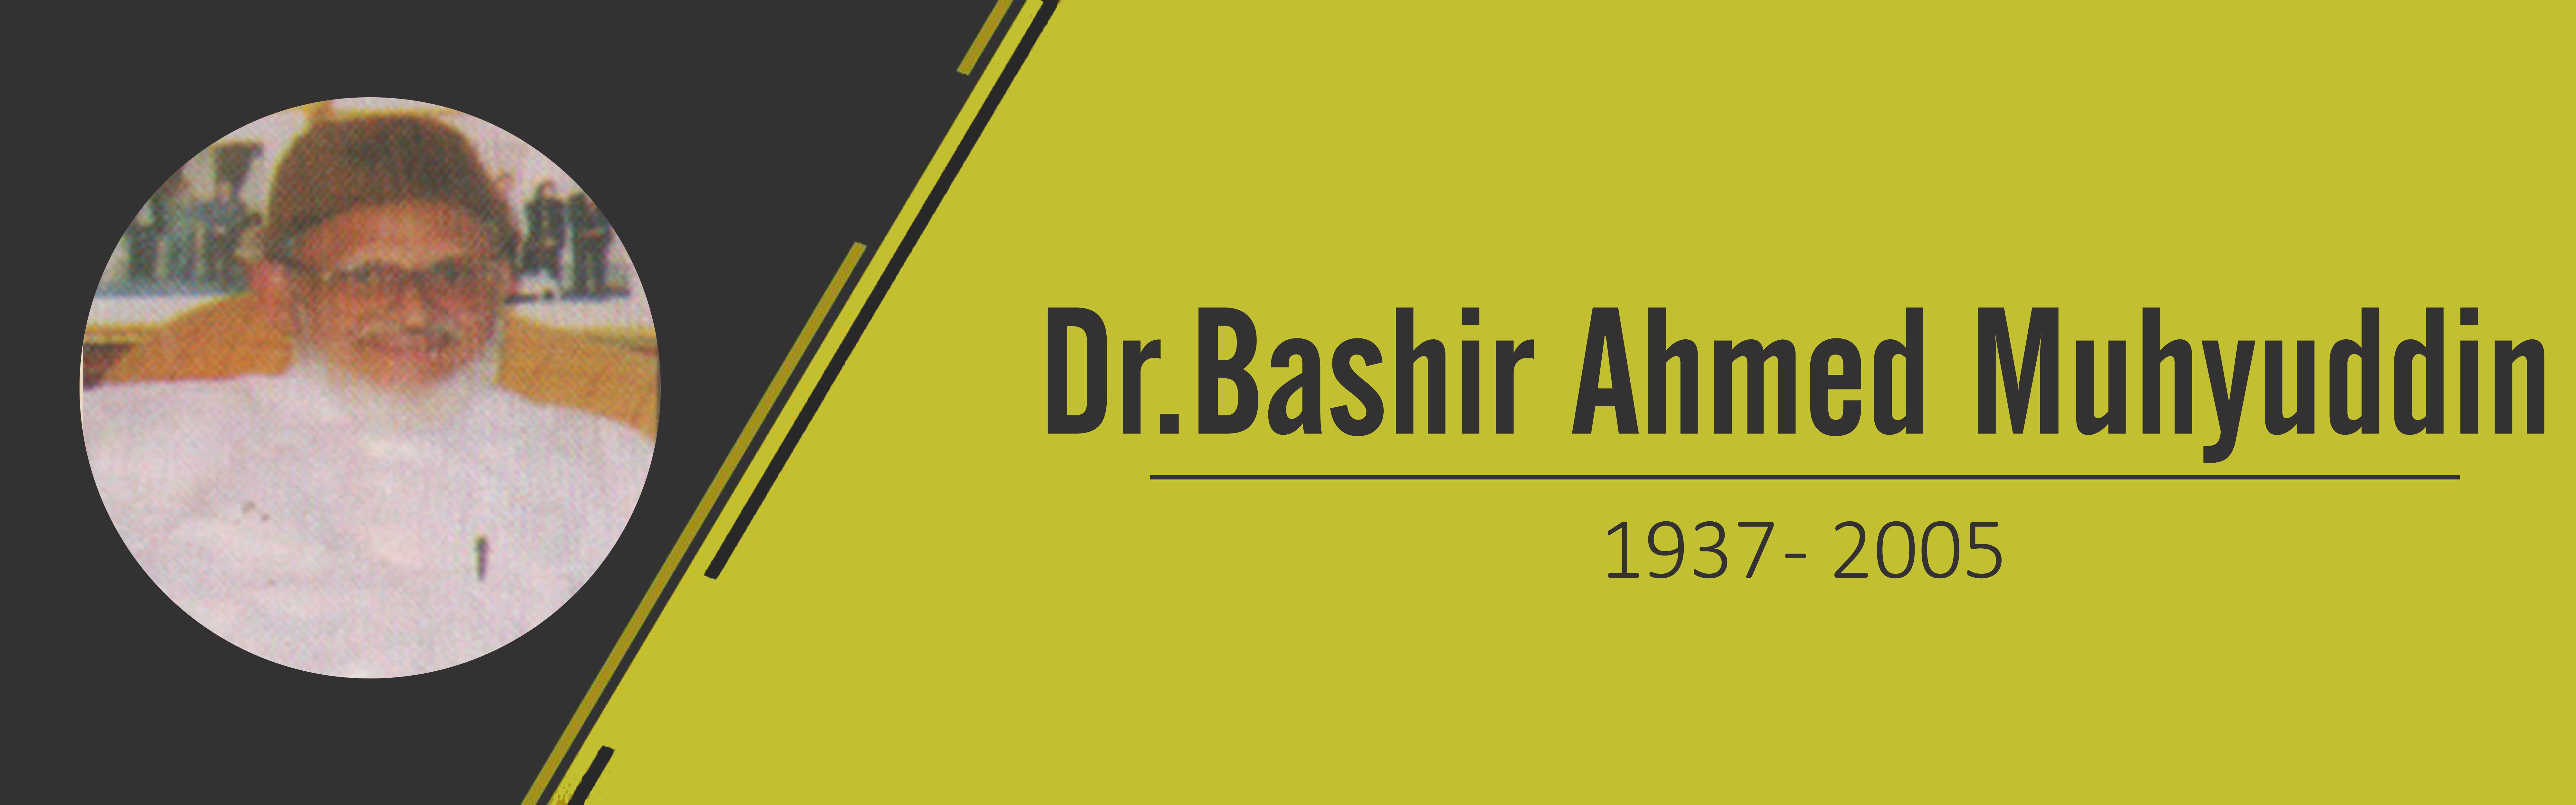 dr bashir ahmed Muhyiddin 